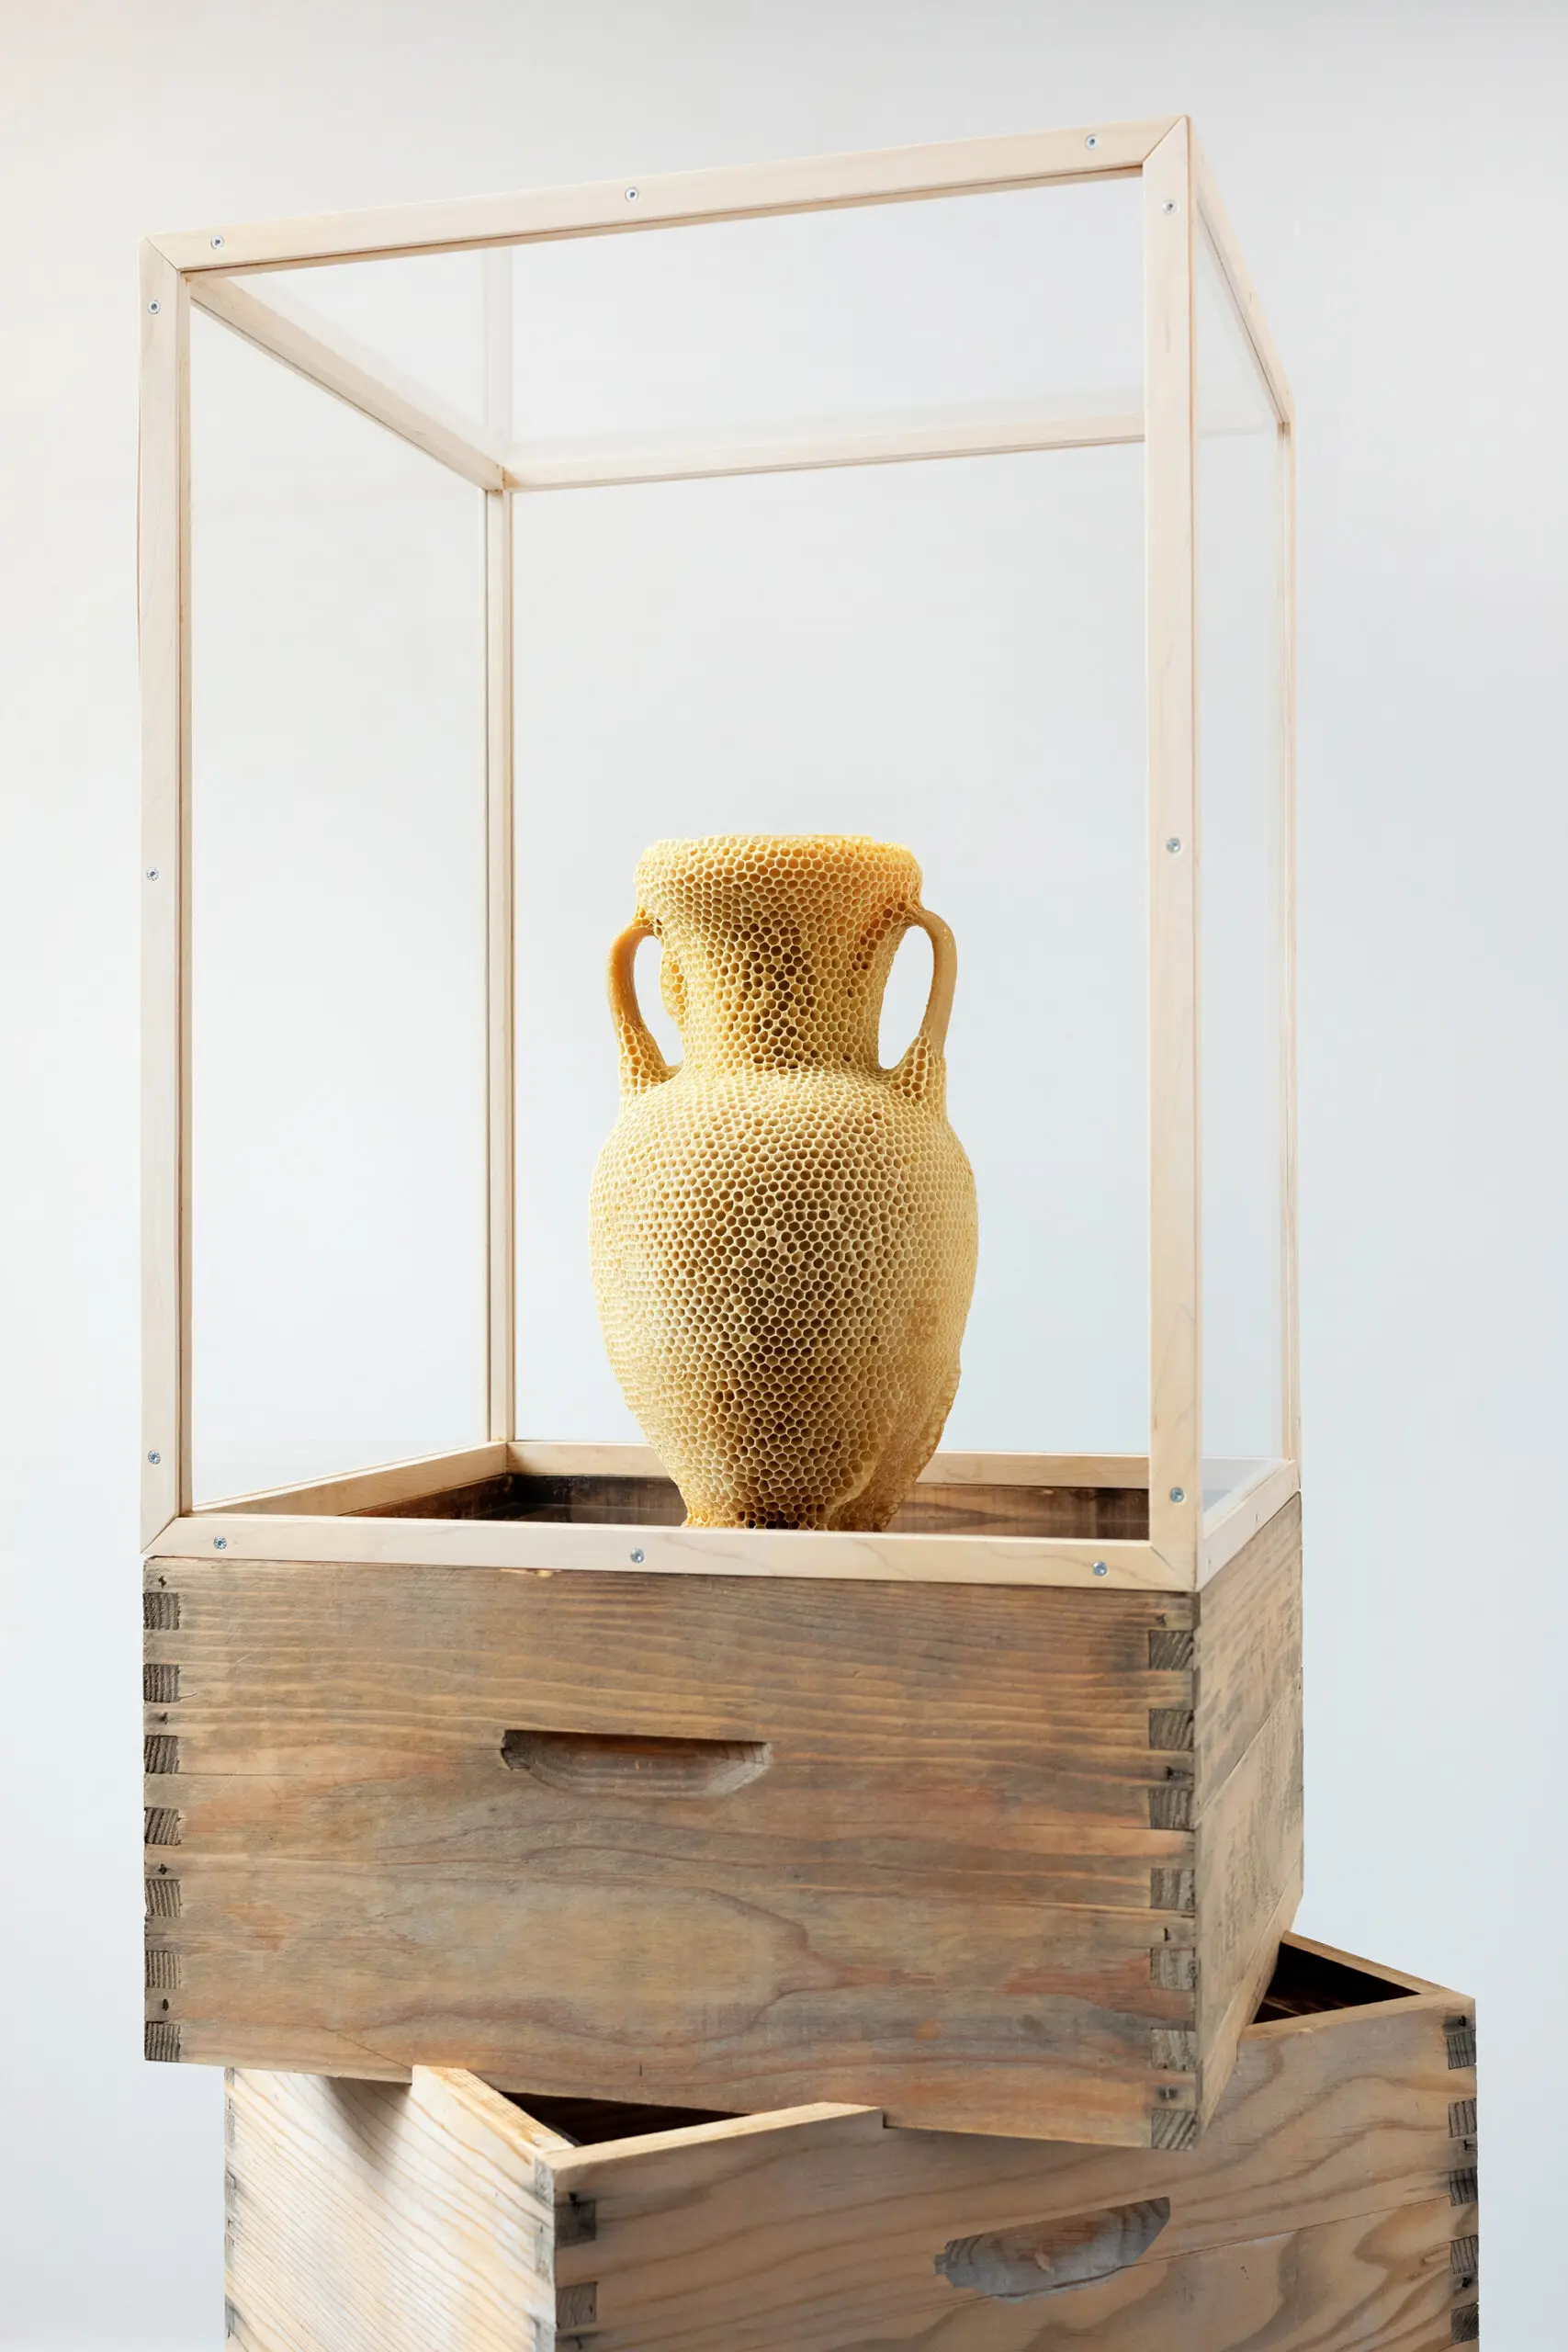 The Honeycomb Amphora tomas libertini exhibida